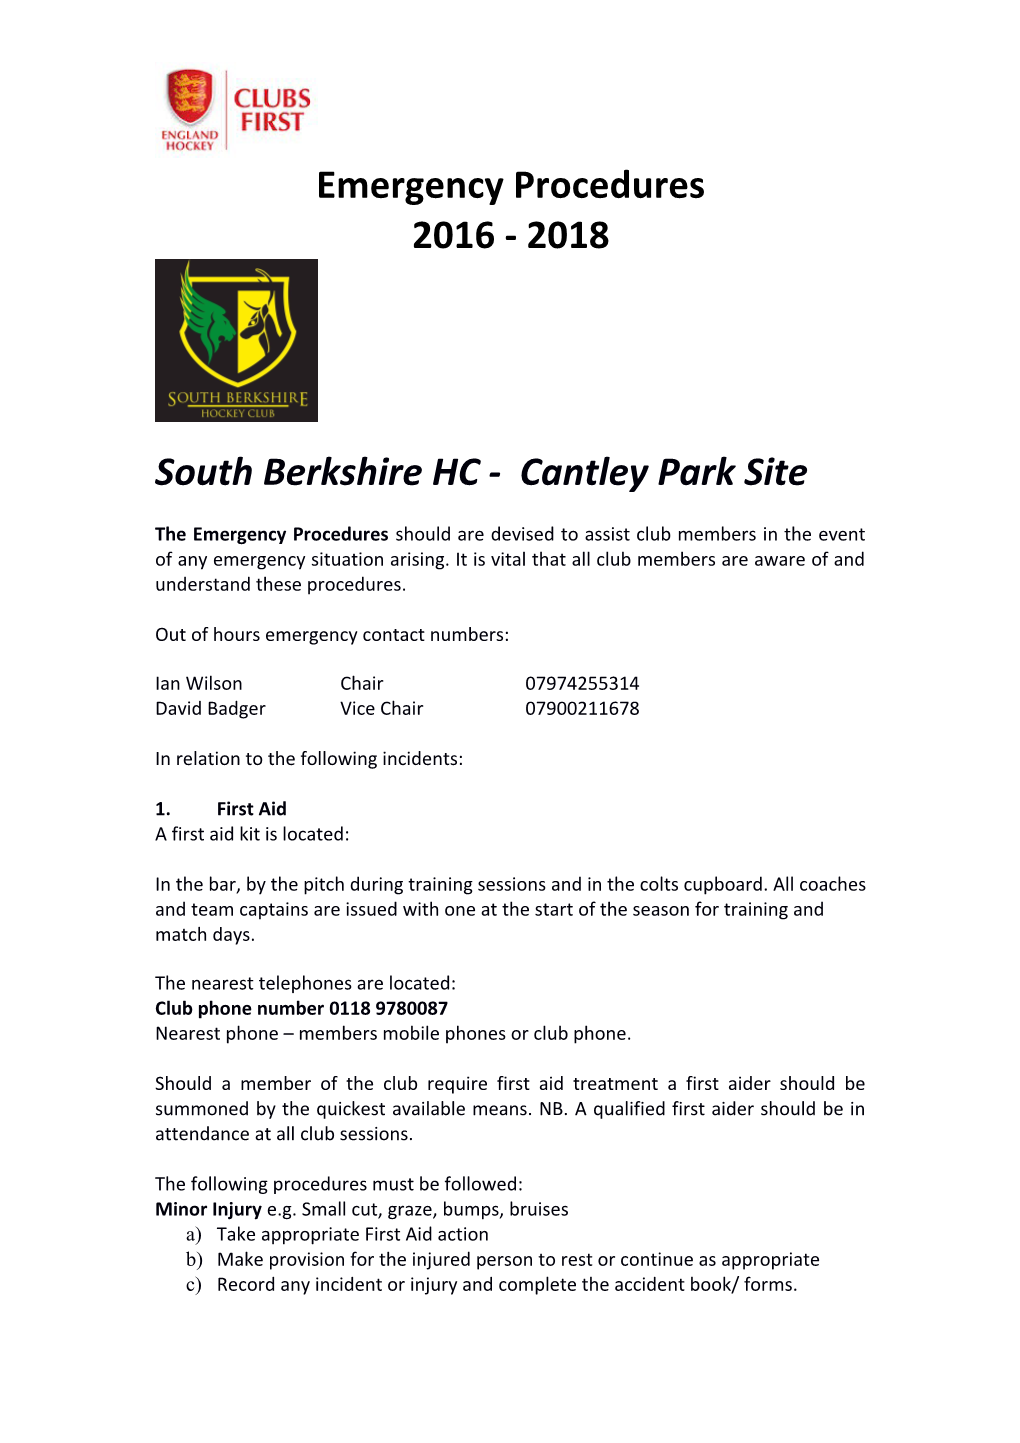 South Berkshire HC - Cantley Park Site